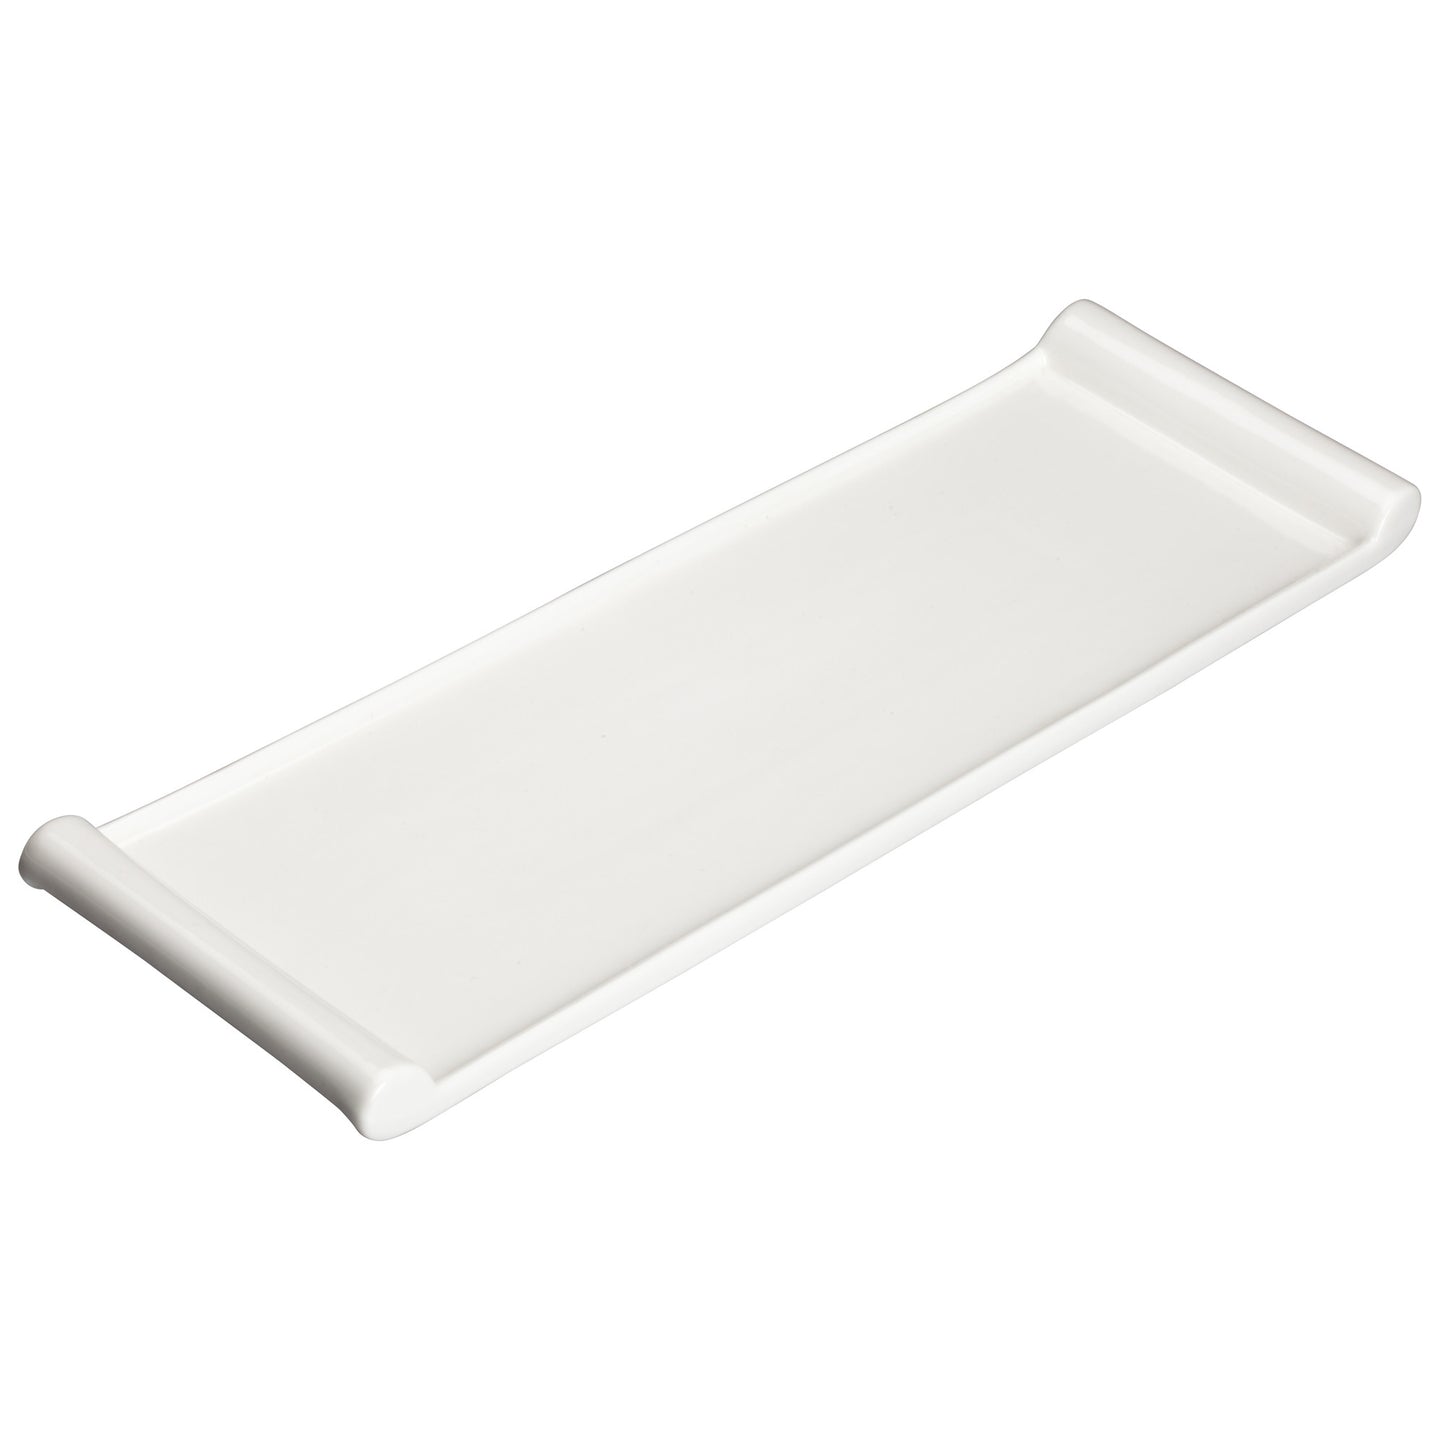 WDP017-118 - 17-3/4" x 5-1/2" Porcelain Rectangular Platter, Bright White, 12 pcs/case